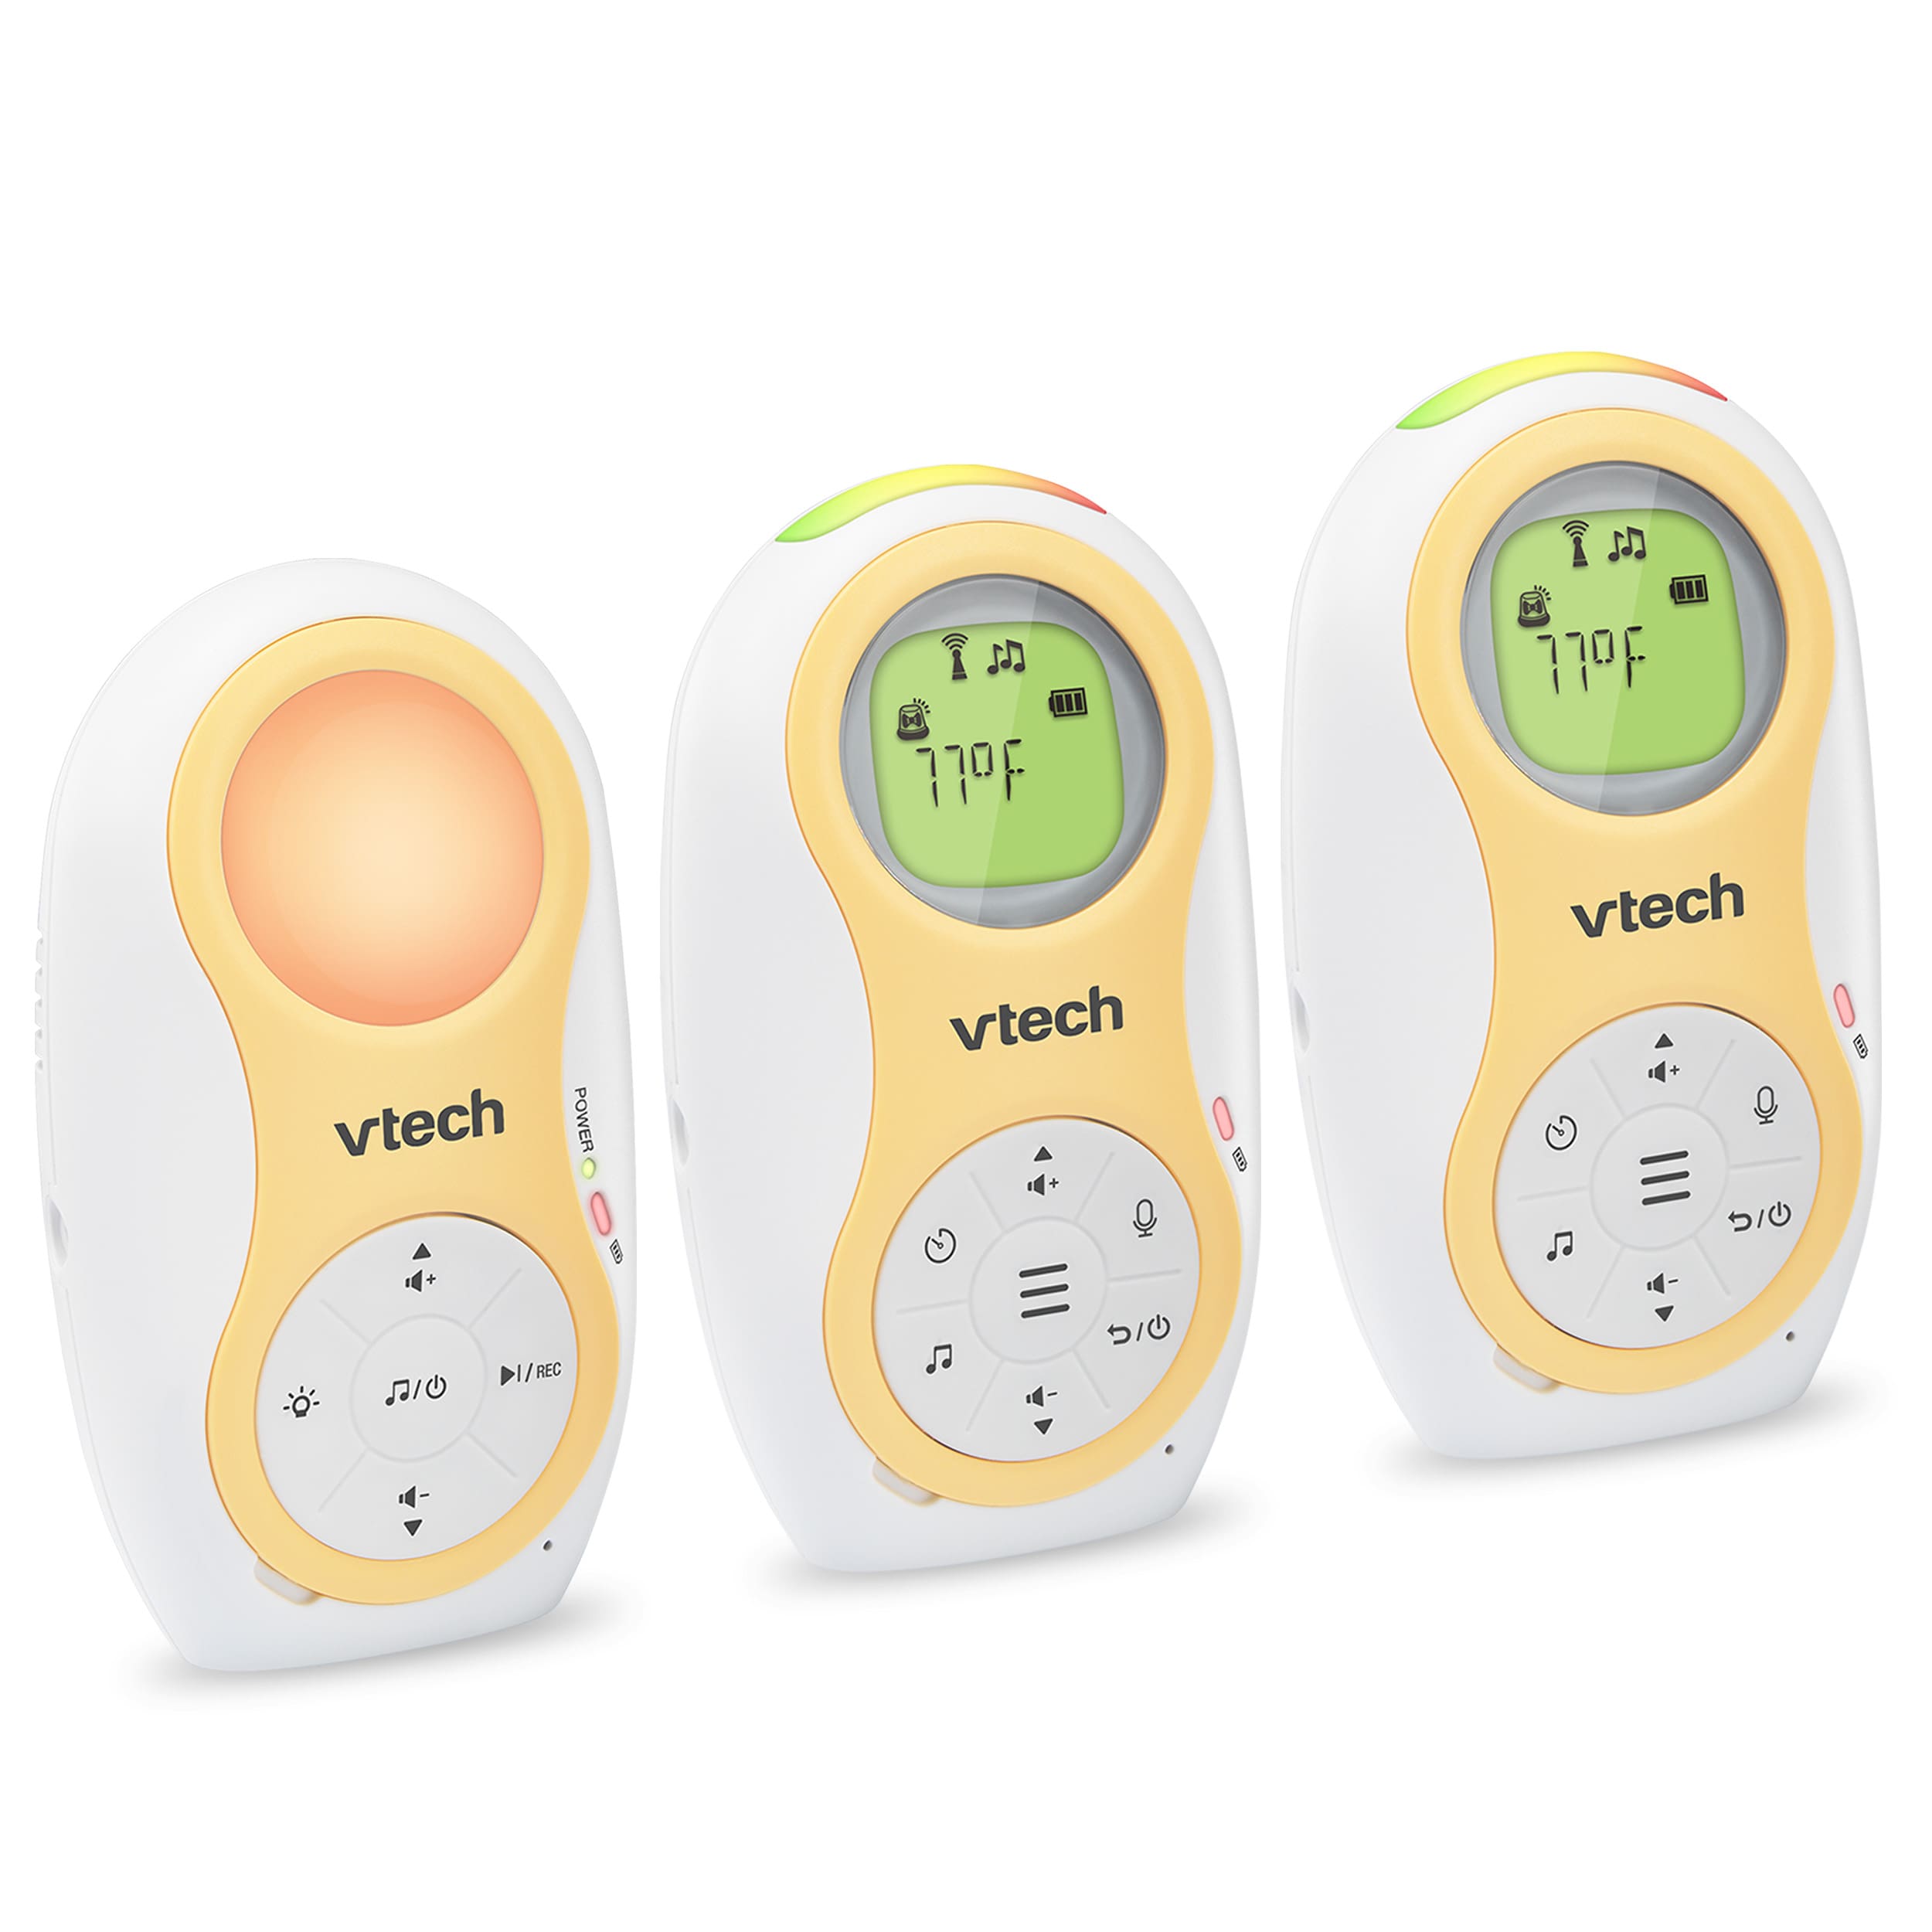 2 Parent Unit Enhanced Range Digital Audio Baby Monitor with Night Light